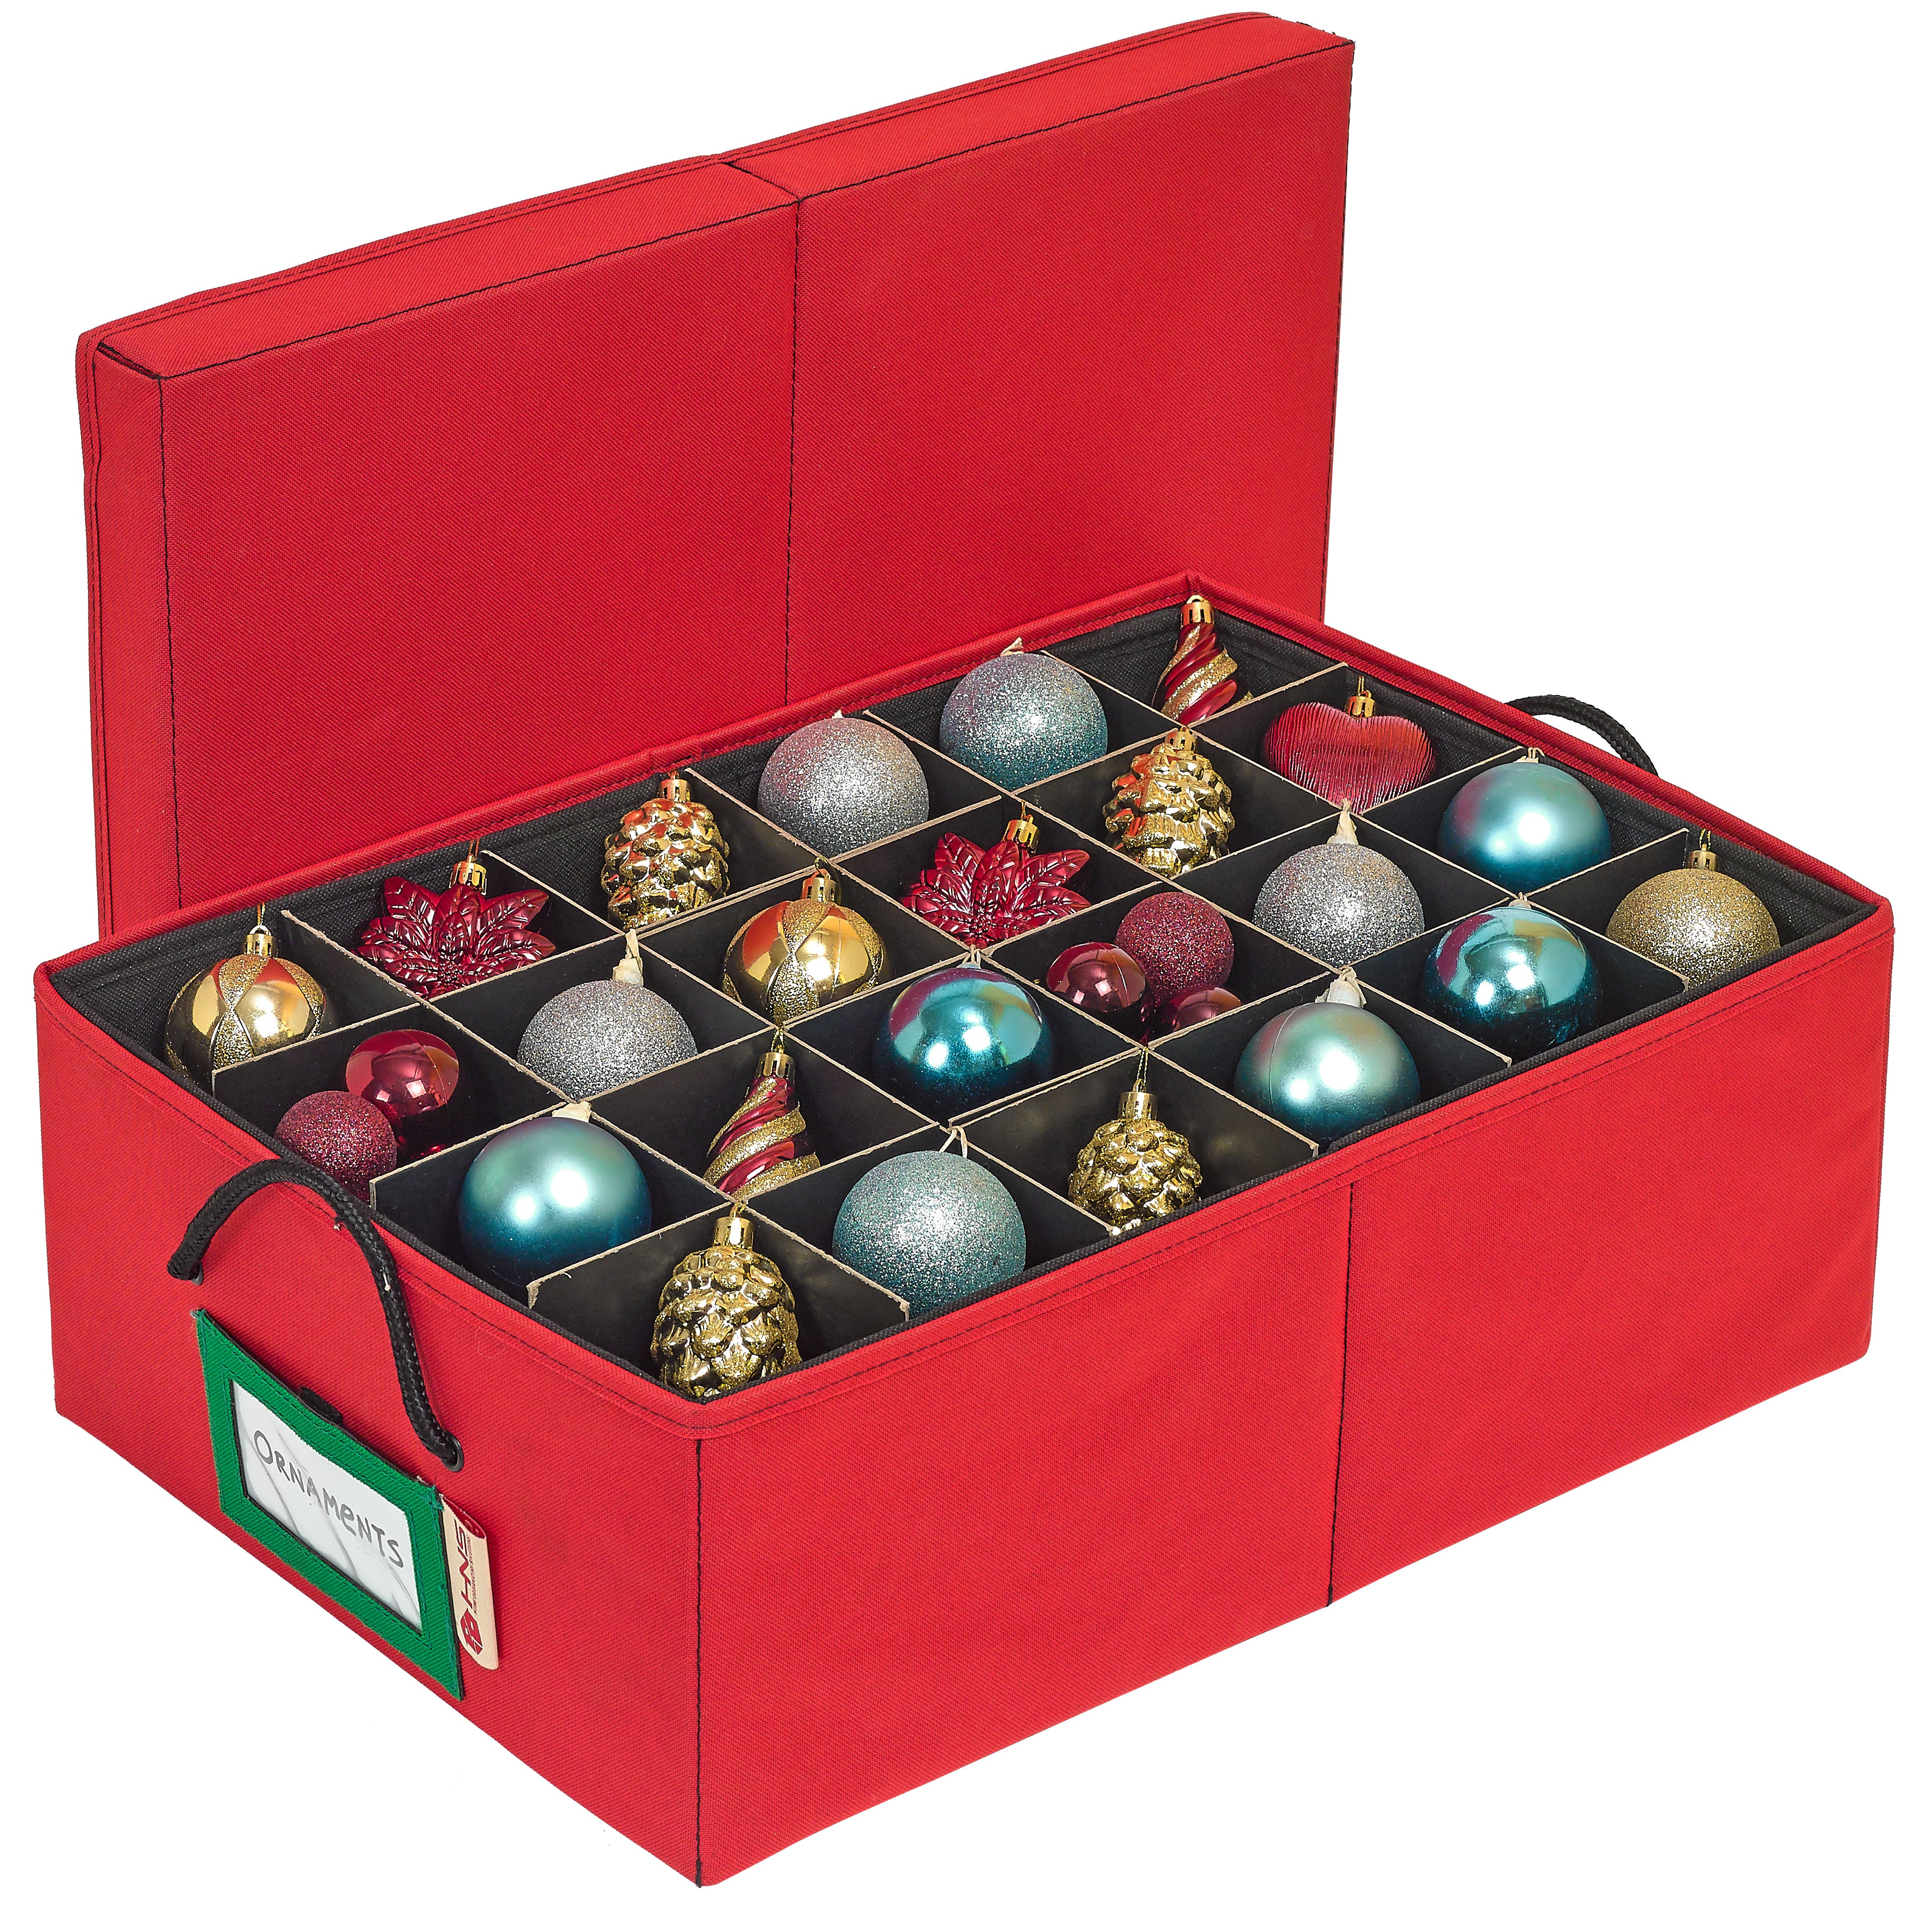 Christmas Ornament Storage Container Box – Heavy Duty, Premium Quality Non-Woven Storage Bins.